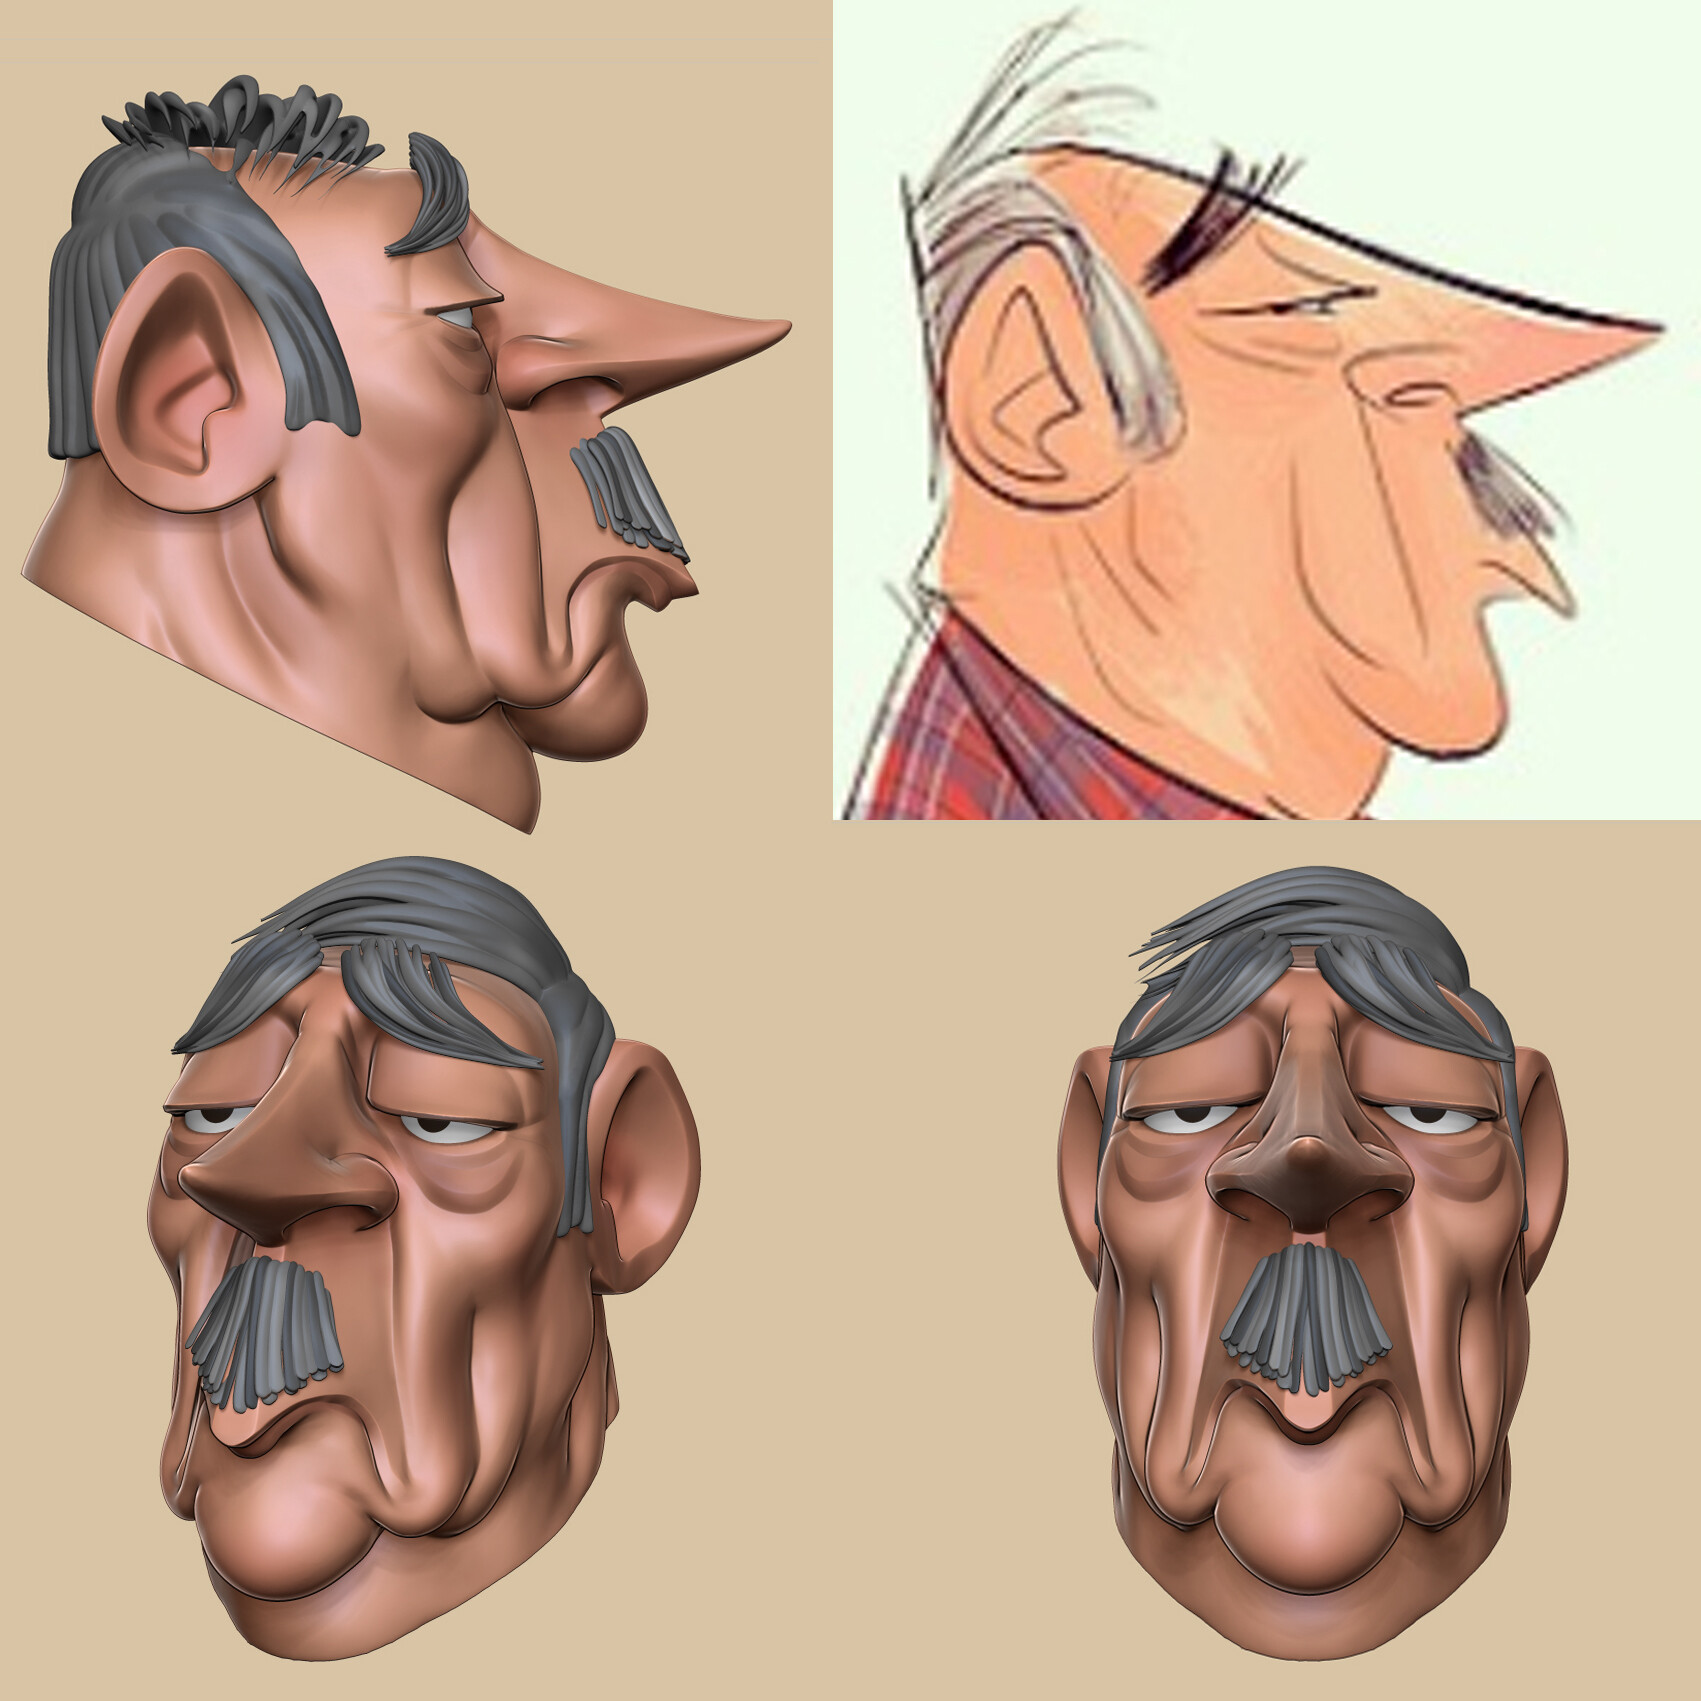 old man cartoon character sketch